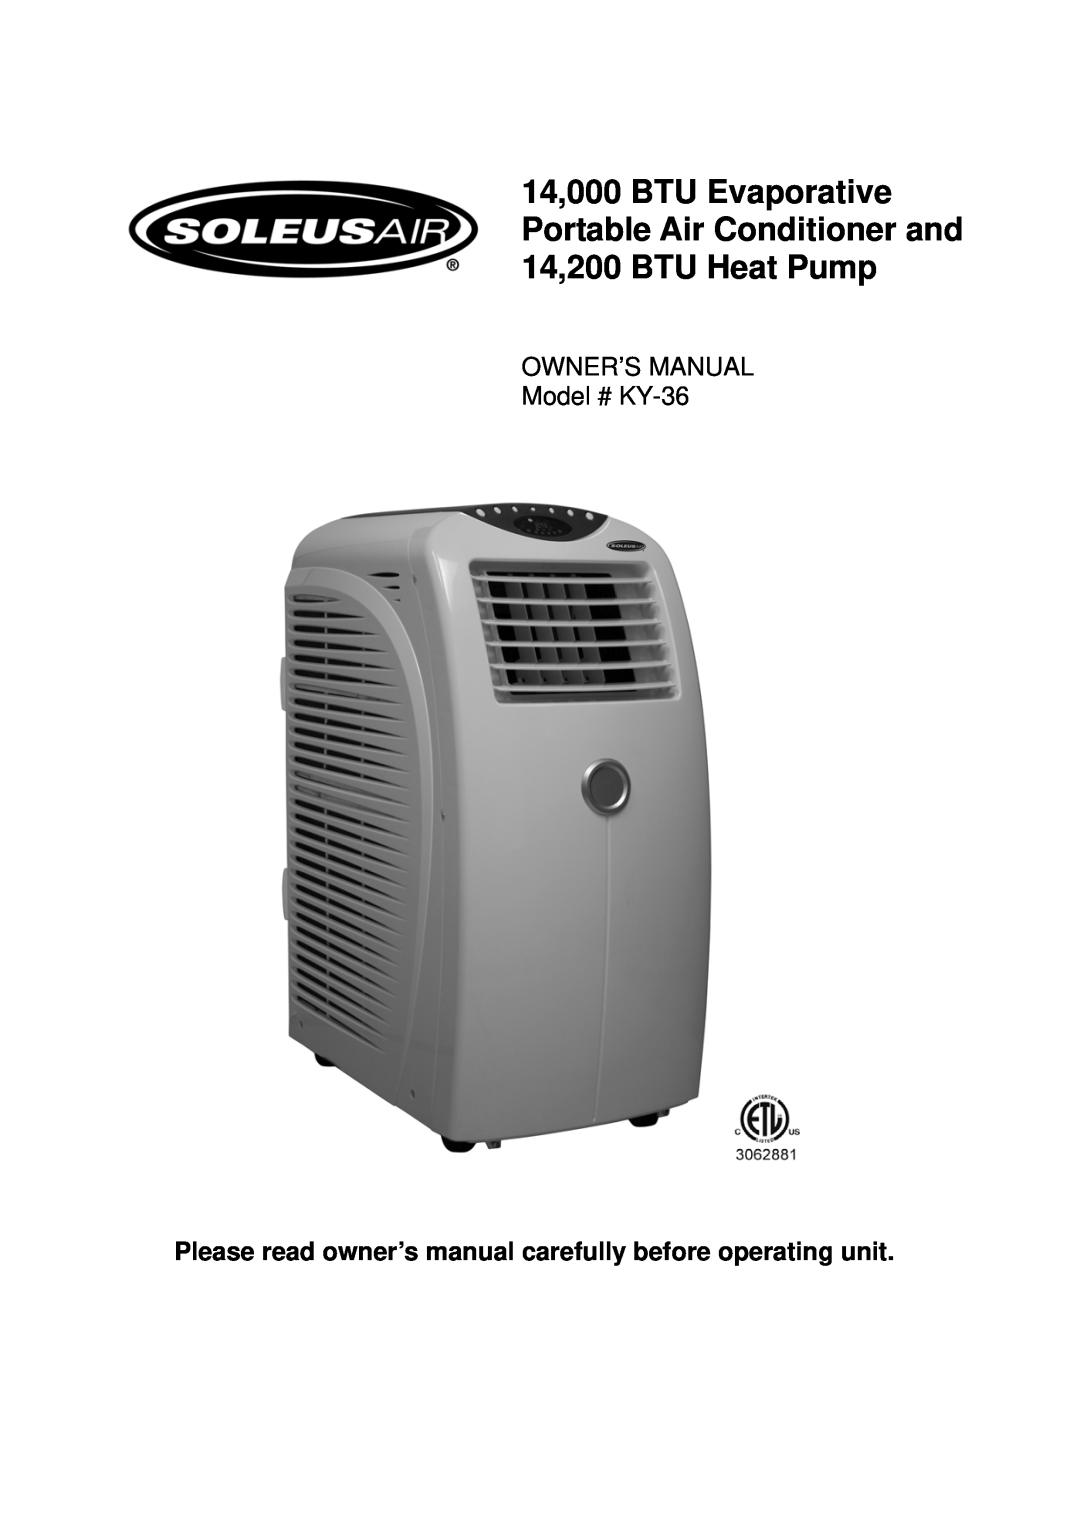 Soleus Air owner manual 14,000 BTU Evaporative, Portable Air Conditioner and 14,200 BTU Heat Pump, Model # KY-36 